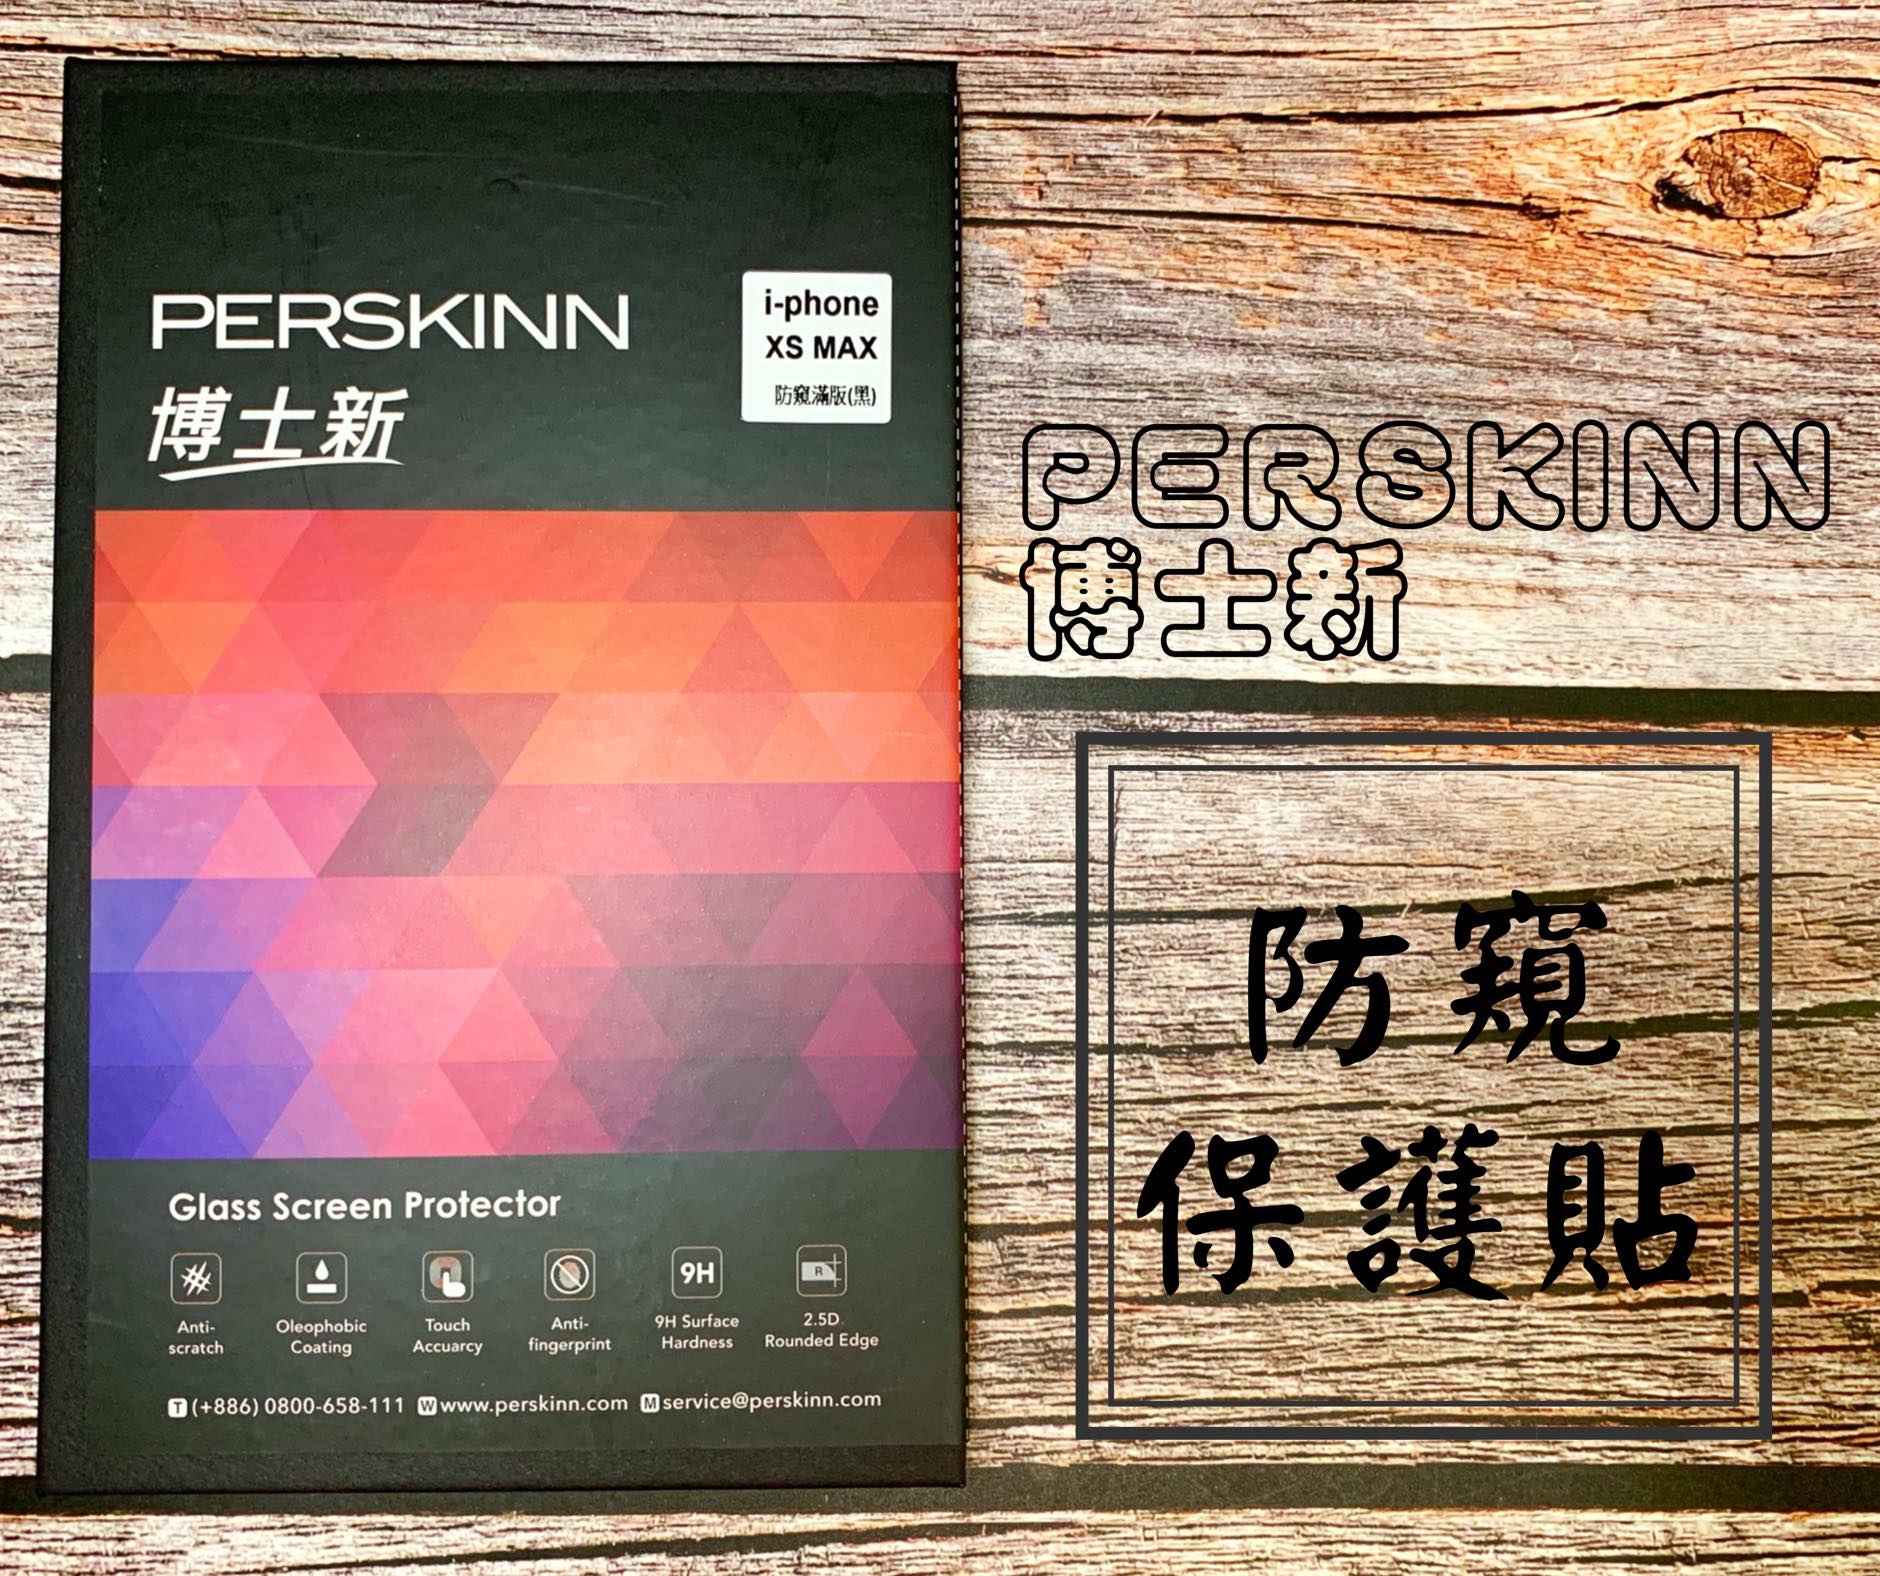 PERSKINN 防窺保護貼推薦 - 自己 DIY 保護貼教學、對比防窺與一般保護貼差異 - iPhone保護貼 - 科技生活 - teXch